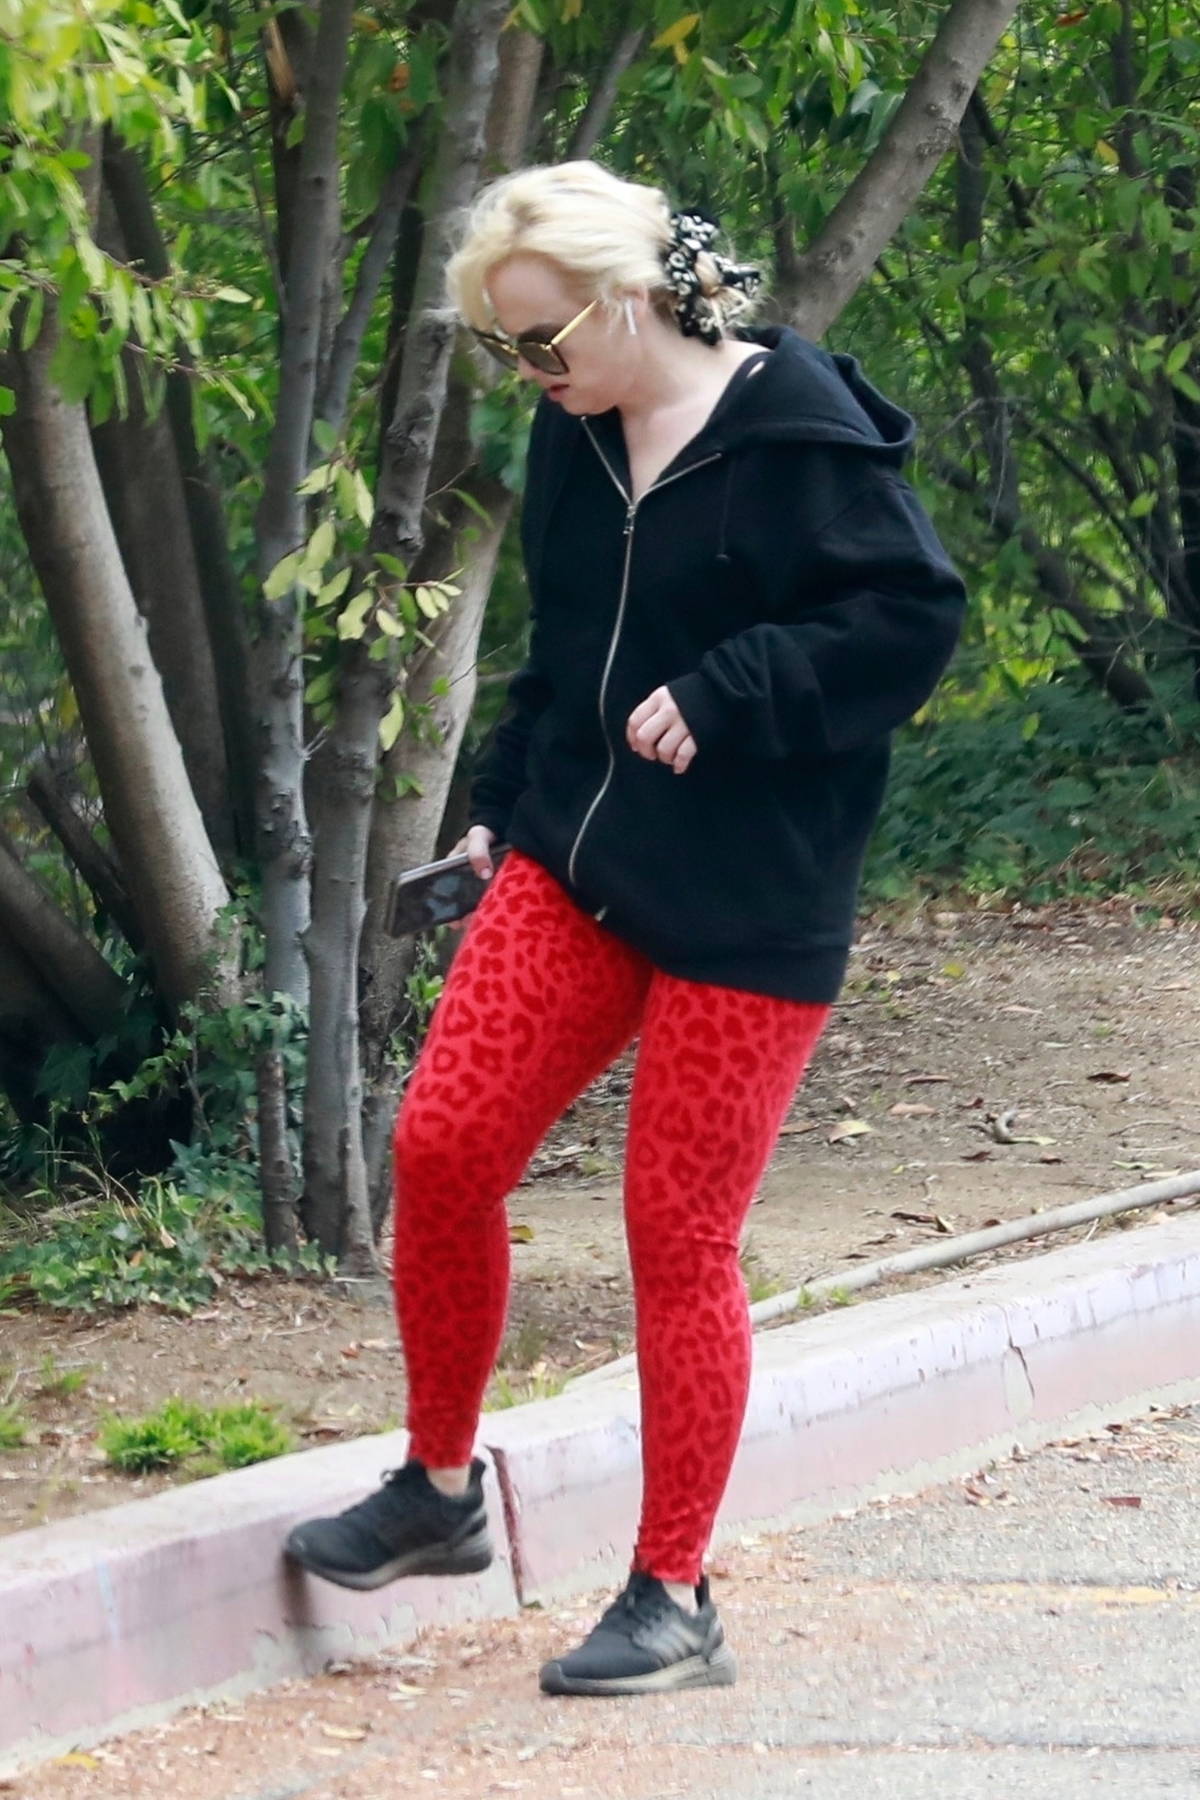 Rebel Wilson Goes Hiking In Red Cheetah Print Leggings: Photo – Hollywood  Life